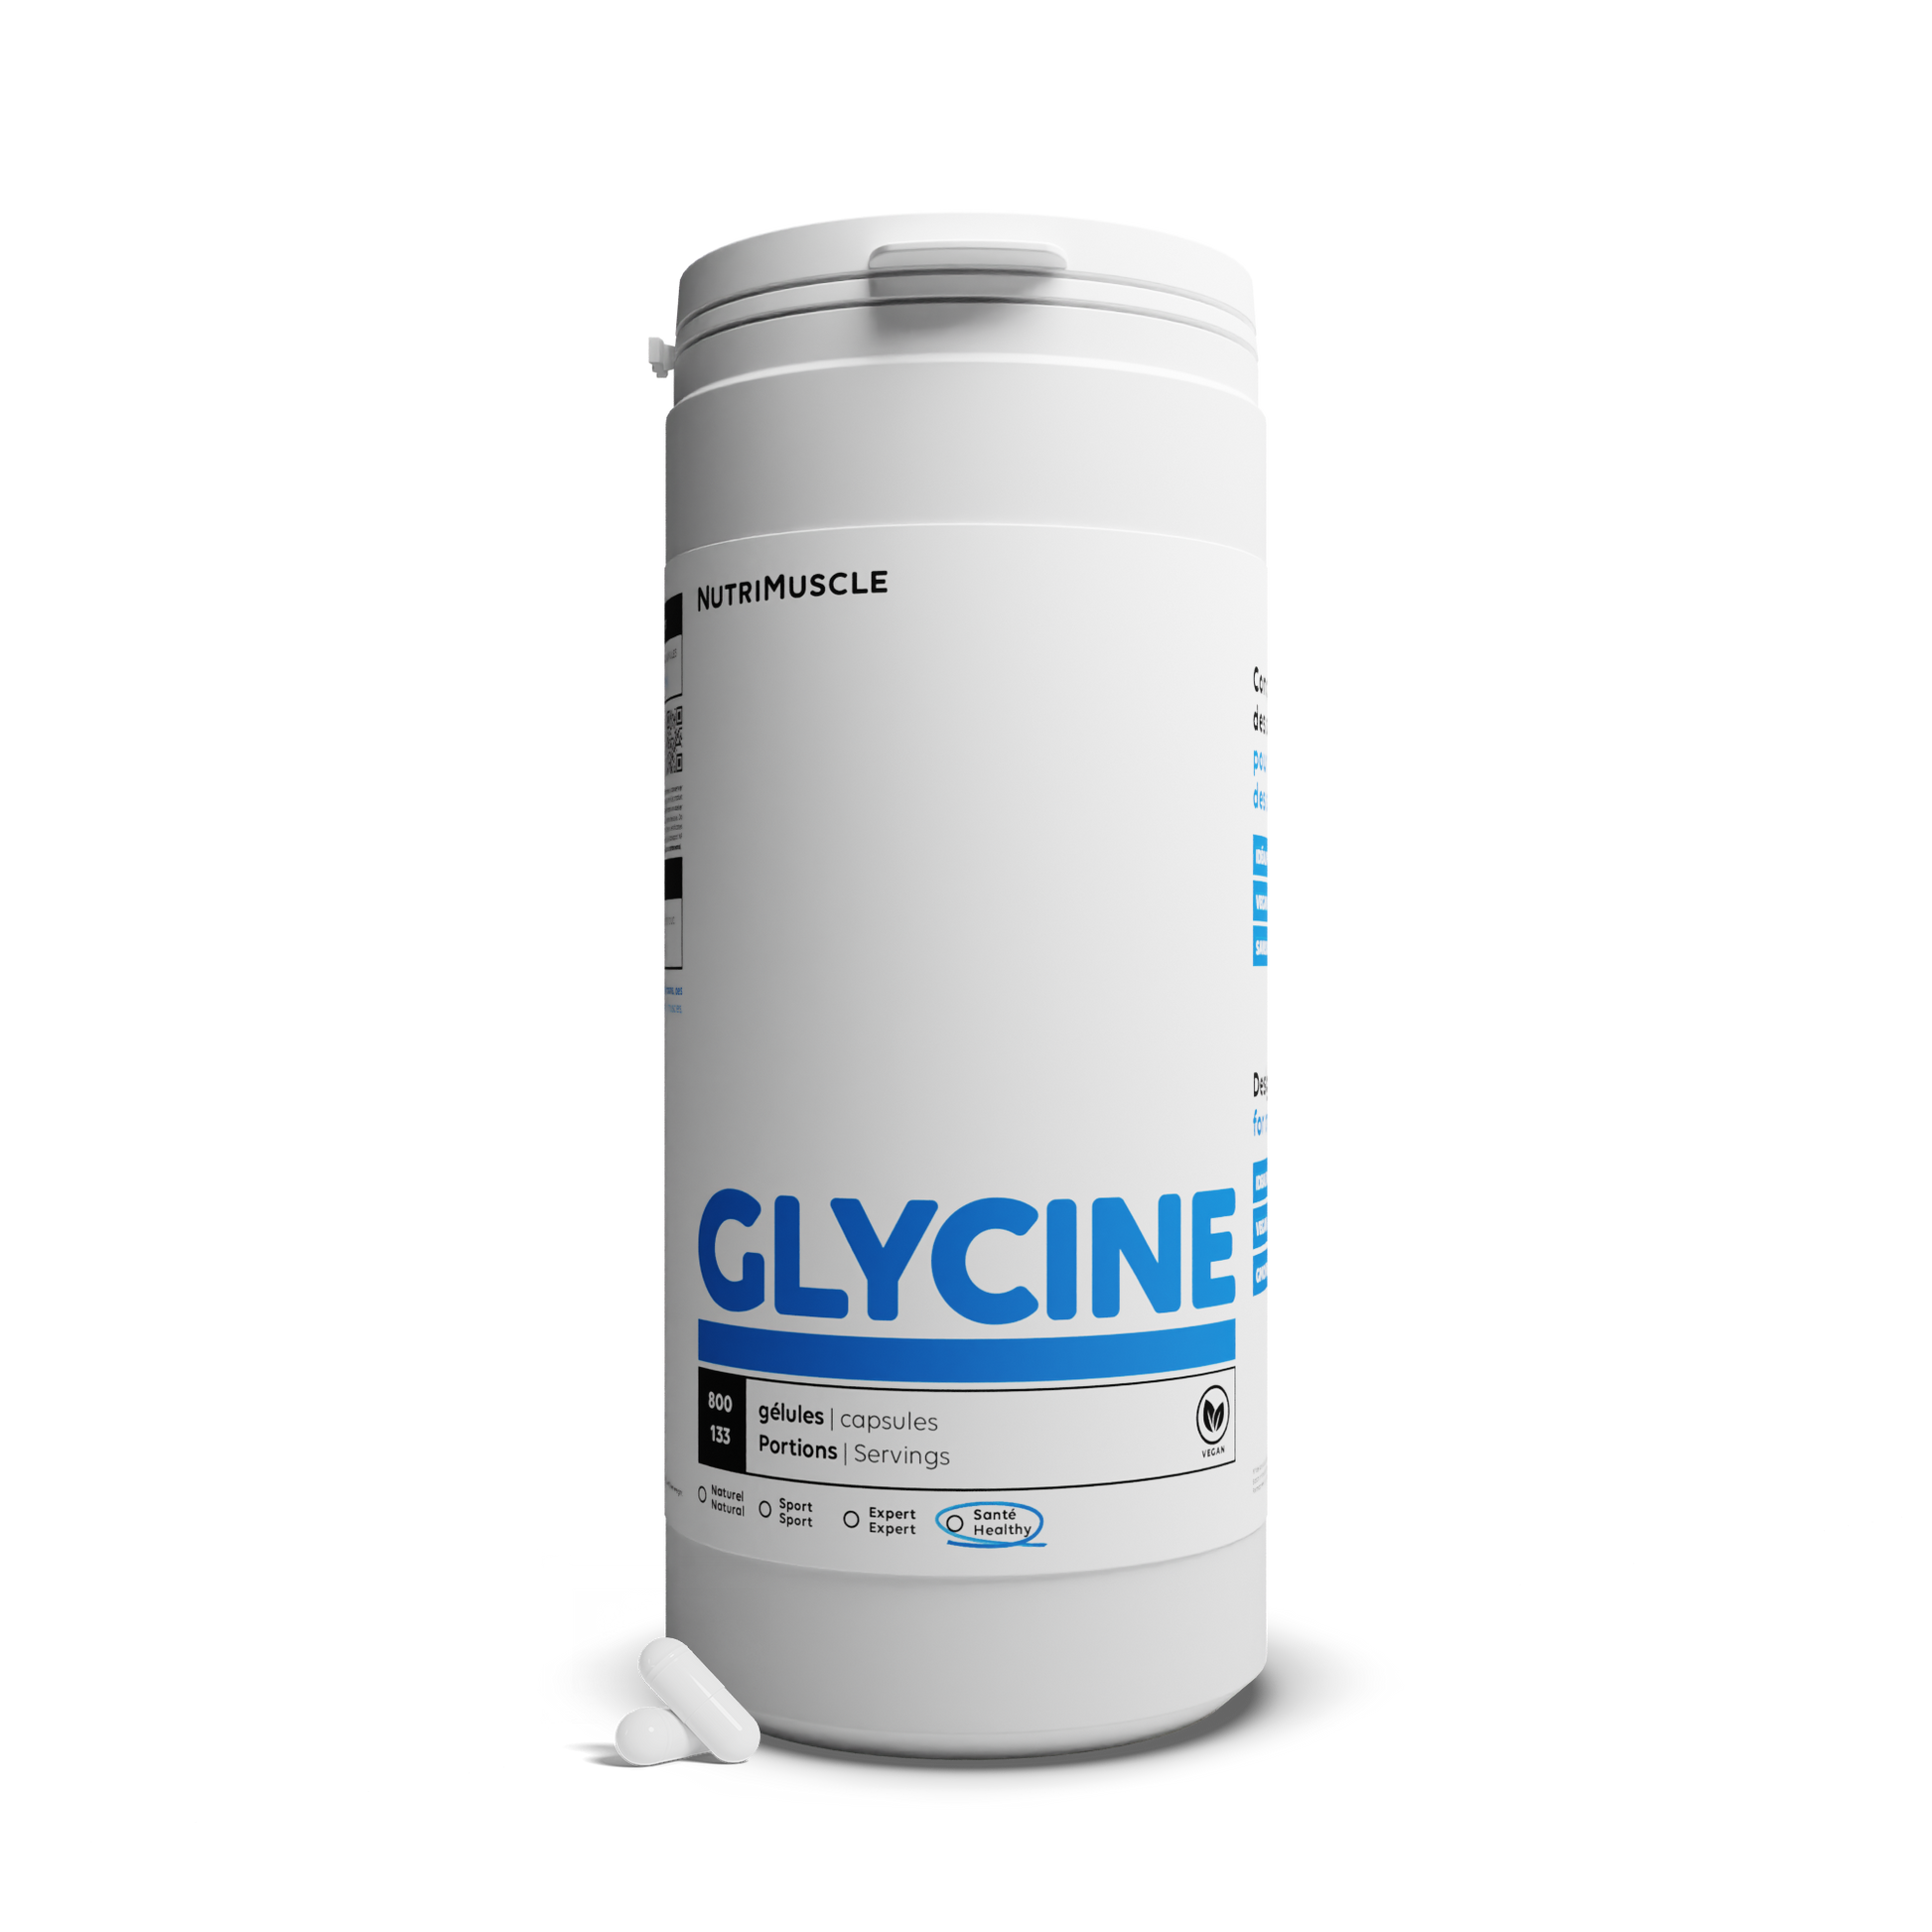 Crystallized glycine in capsules